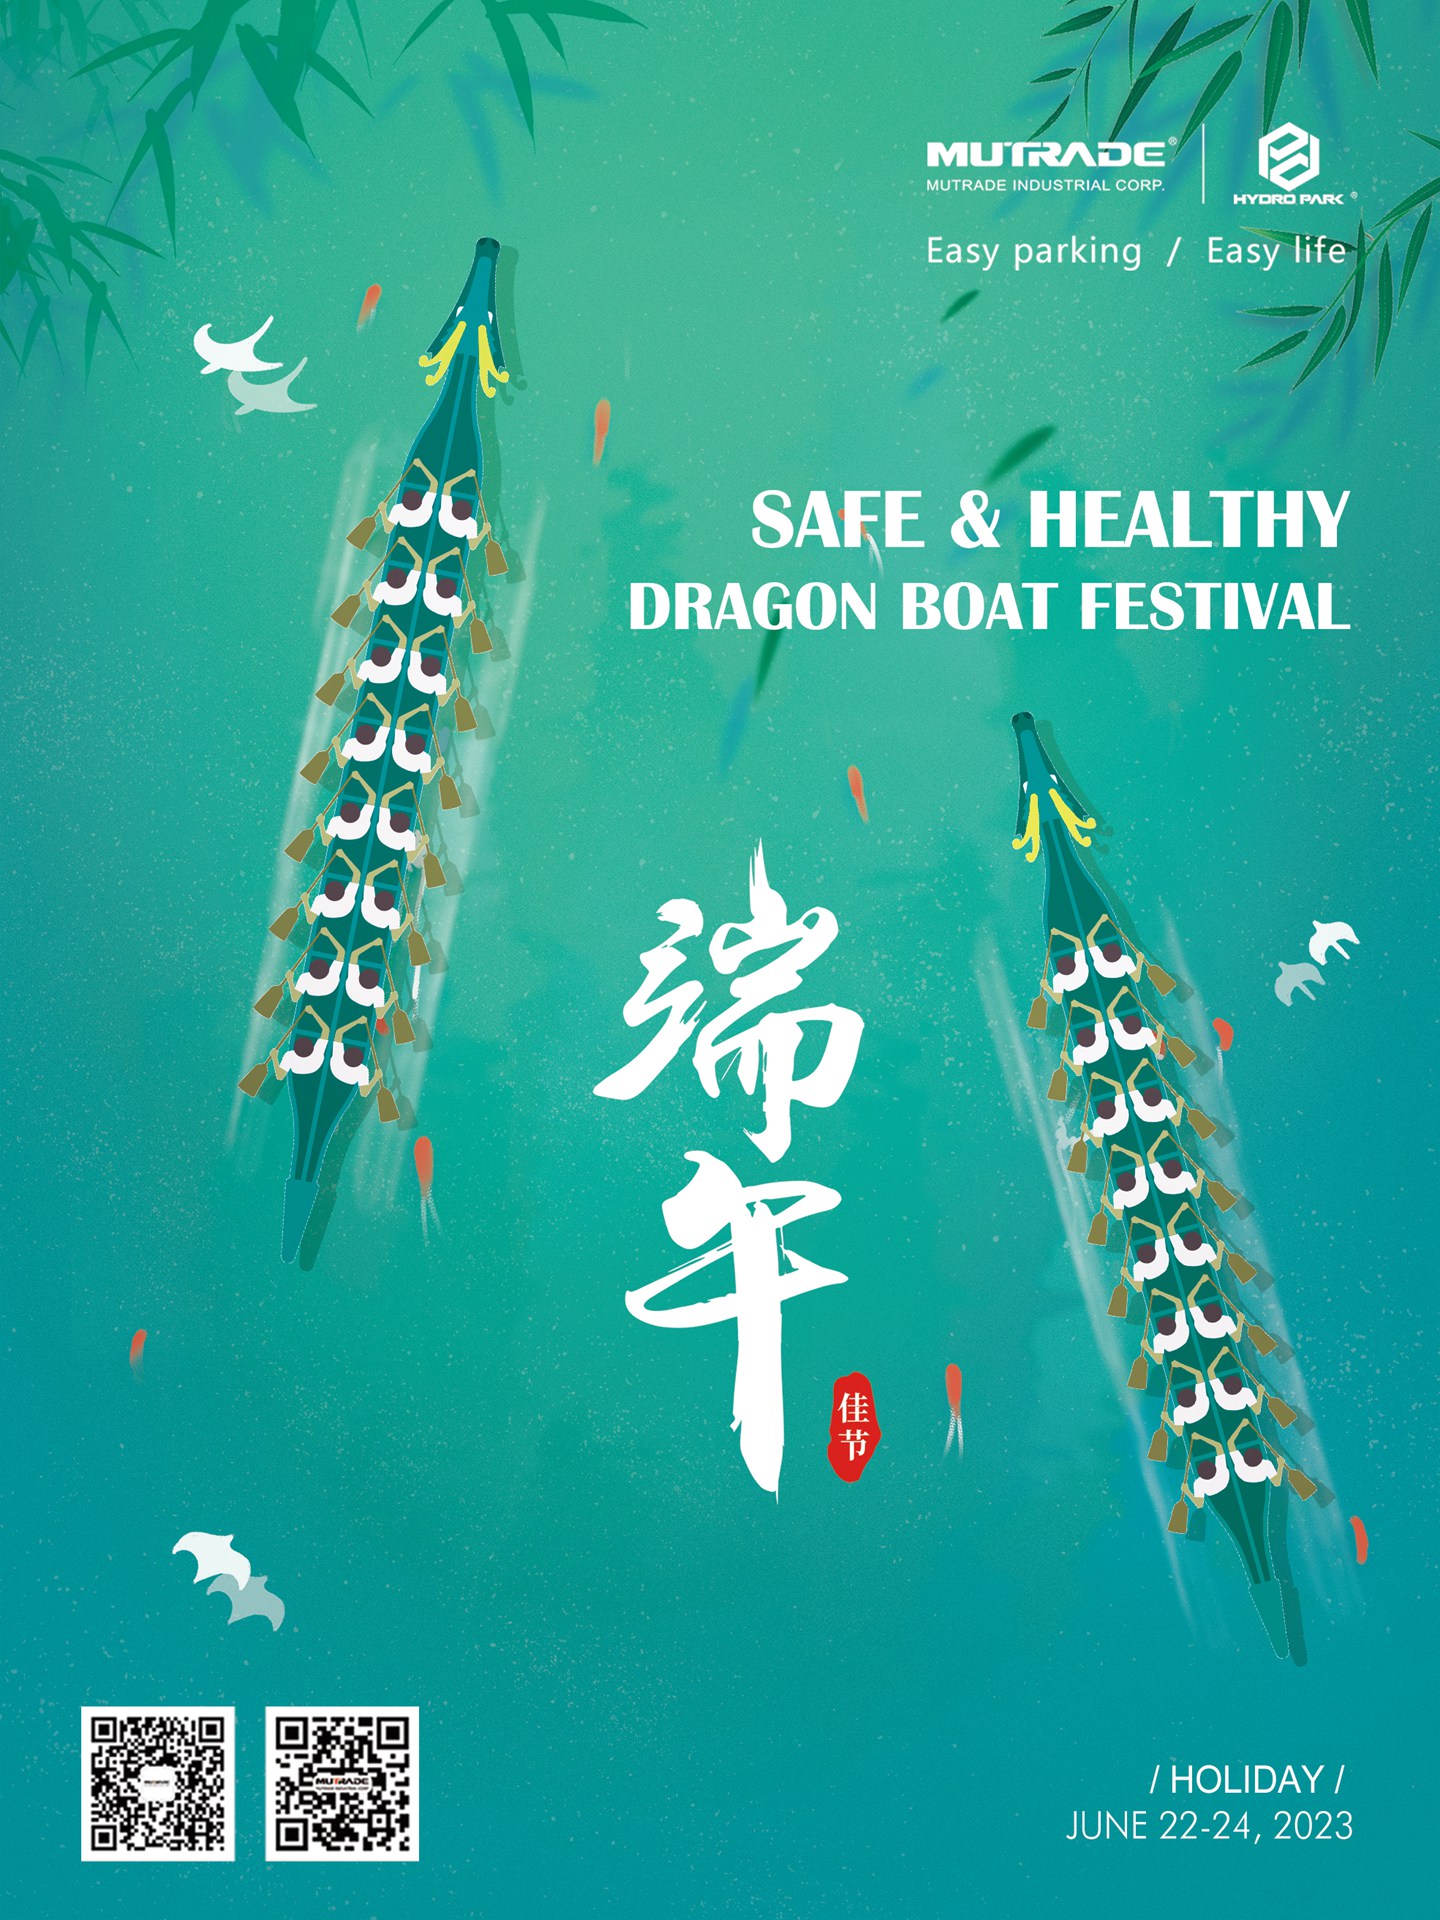 Wir feiern das lebhafte Drachenboot-Festival in China